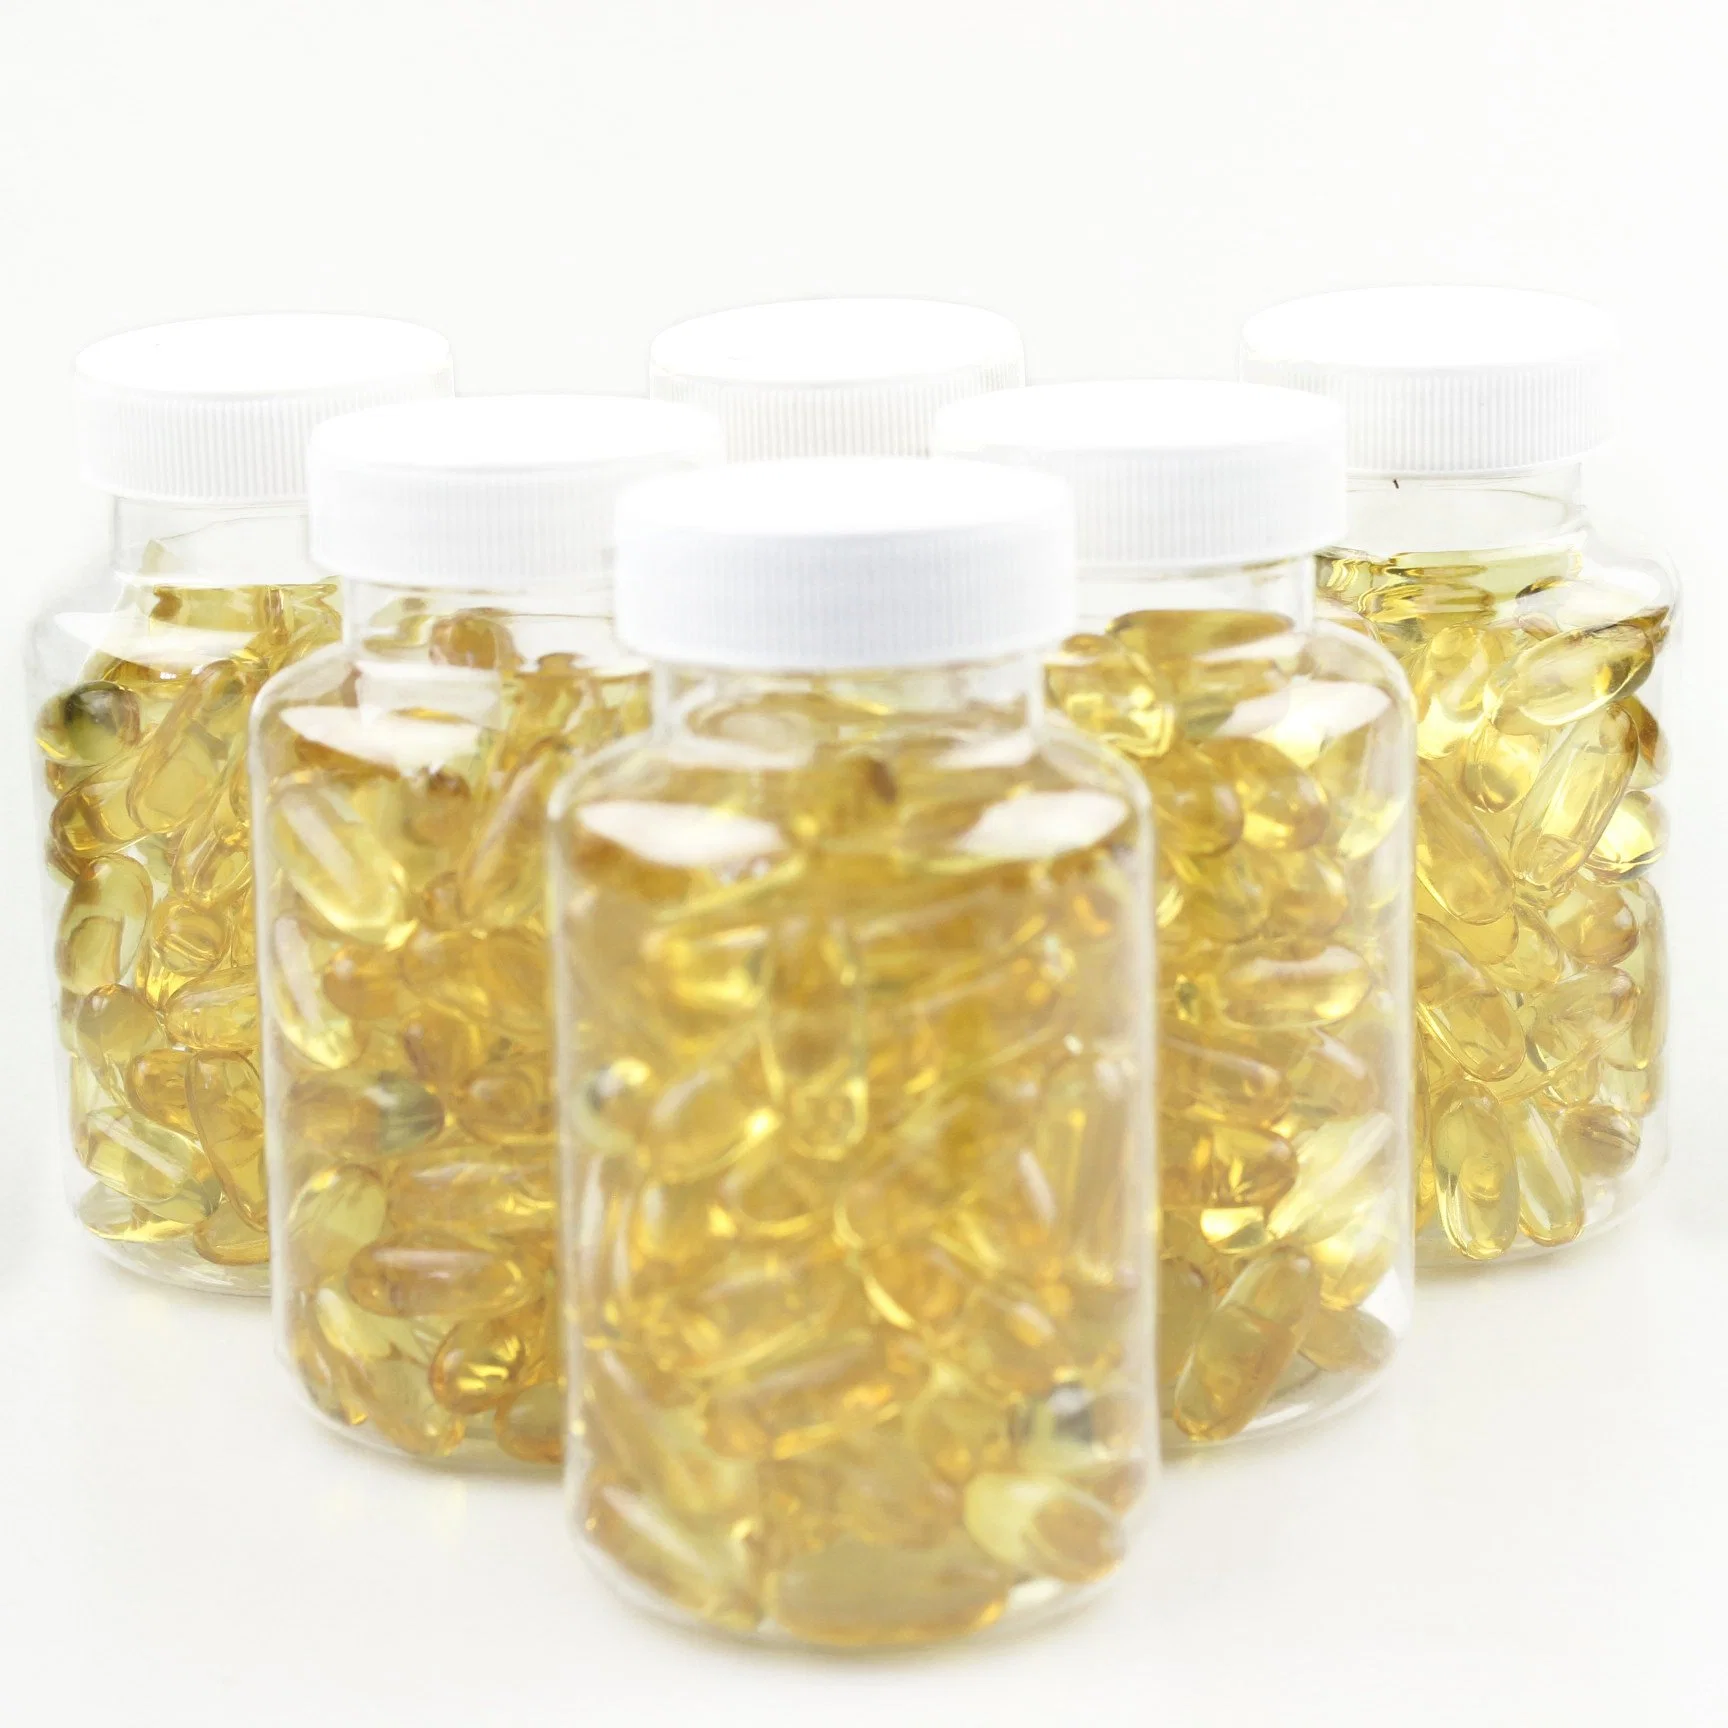 Gel souple Omega 3 huile de poisson de mer profonde certifié GMP Capsules